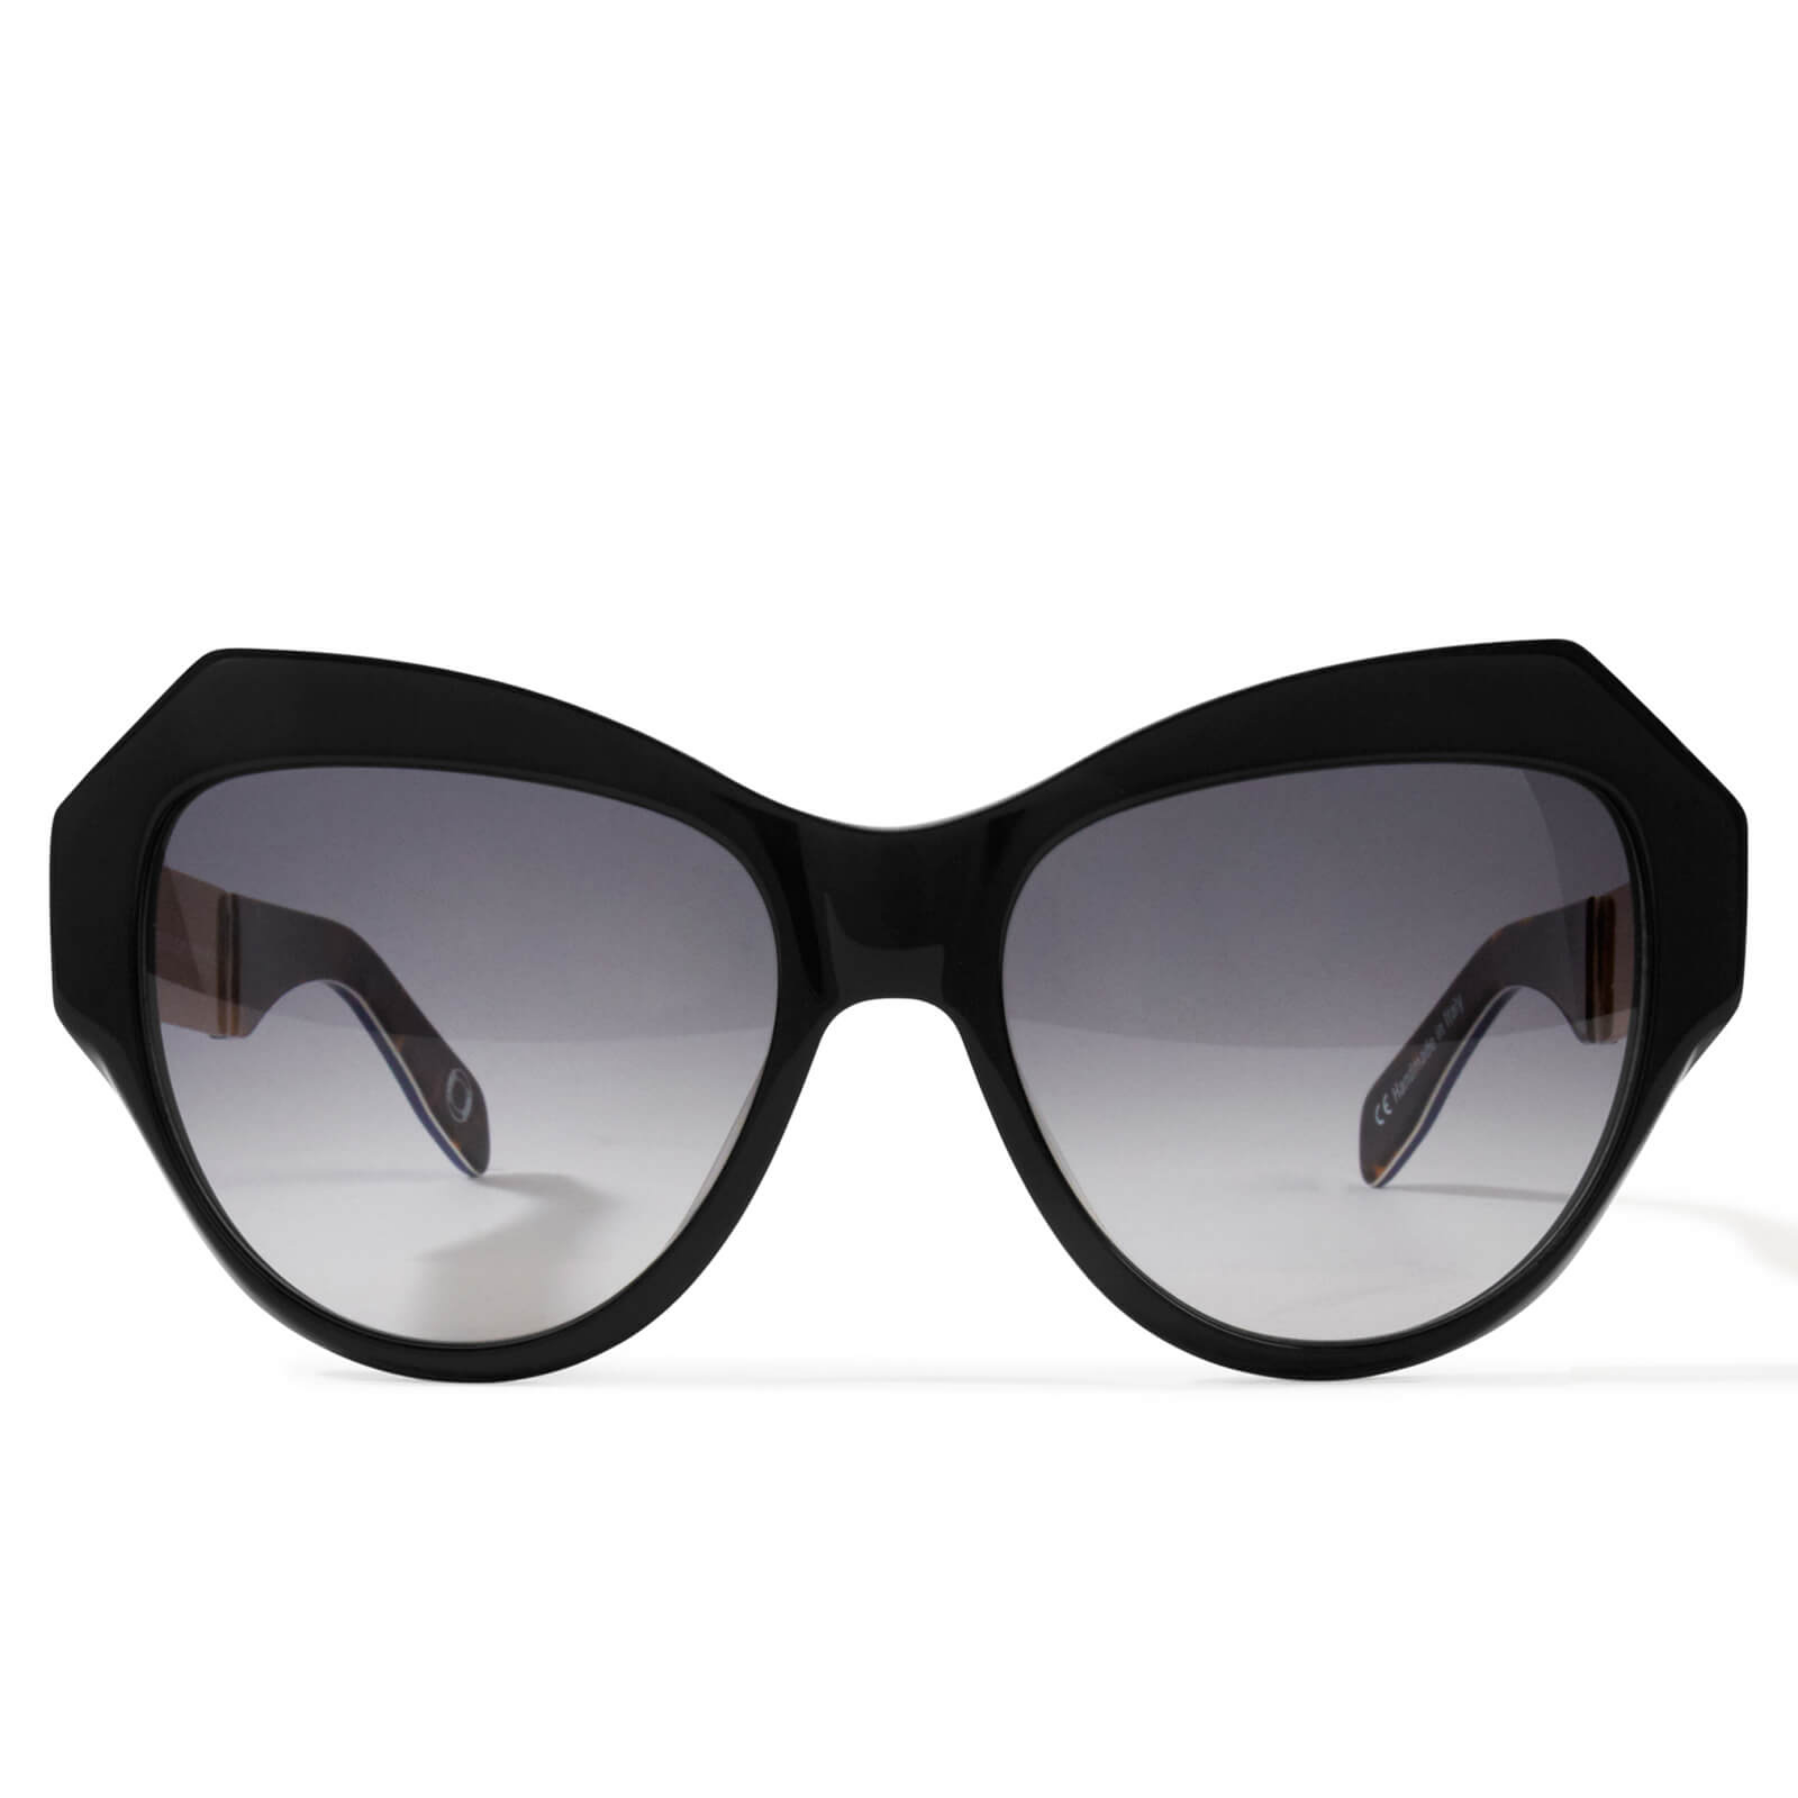 Zazou Sunglasses - Black